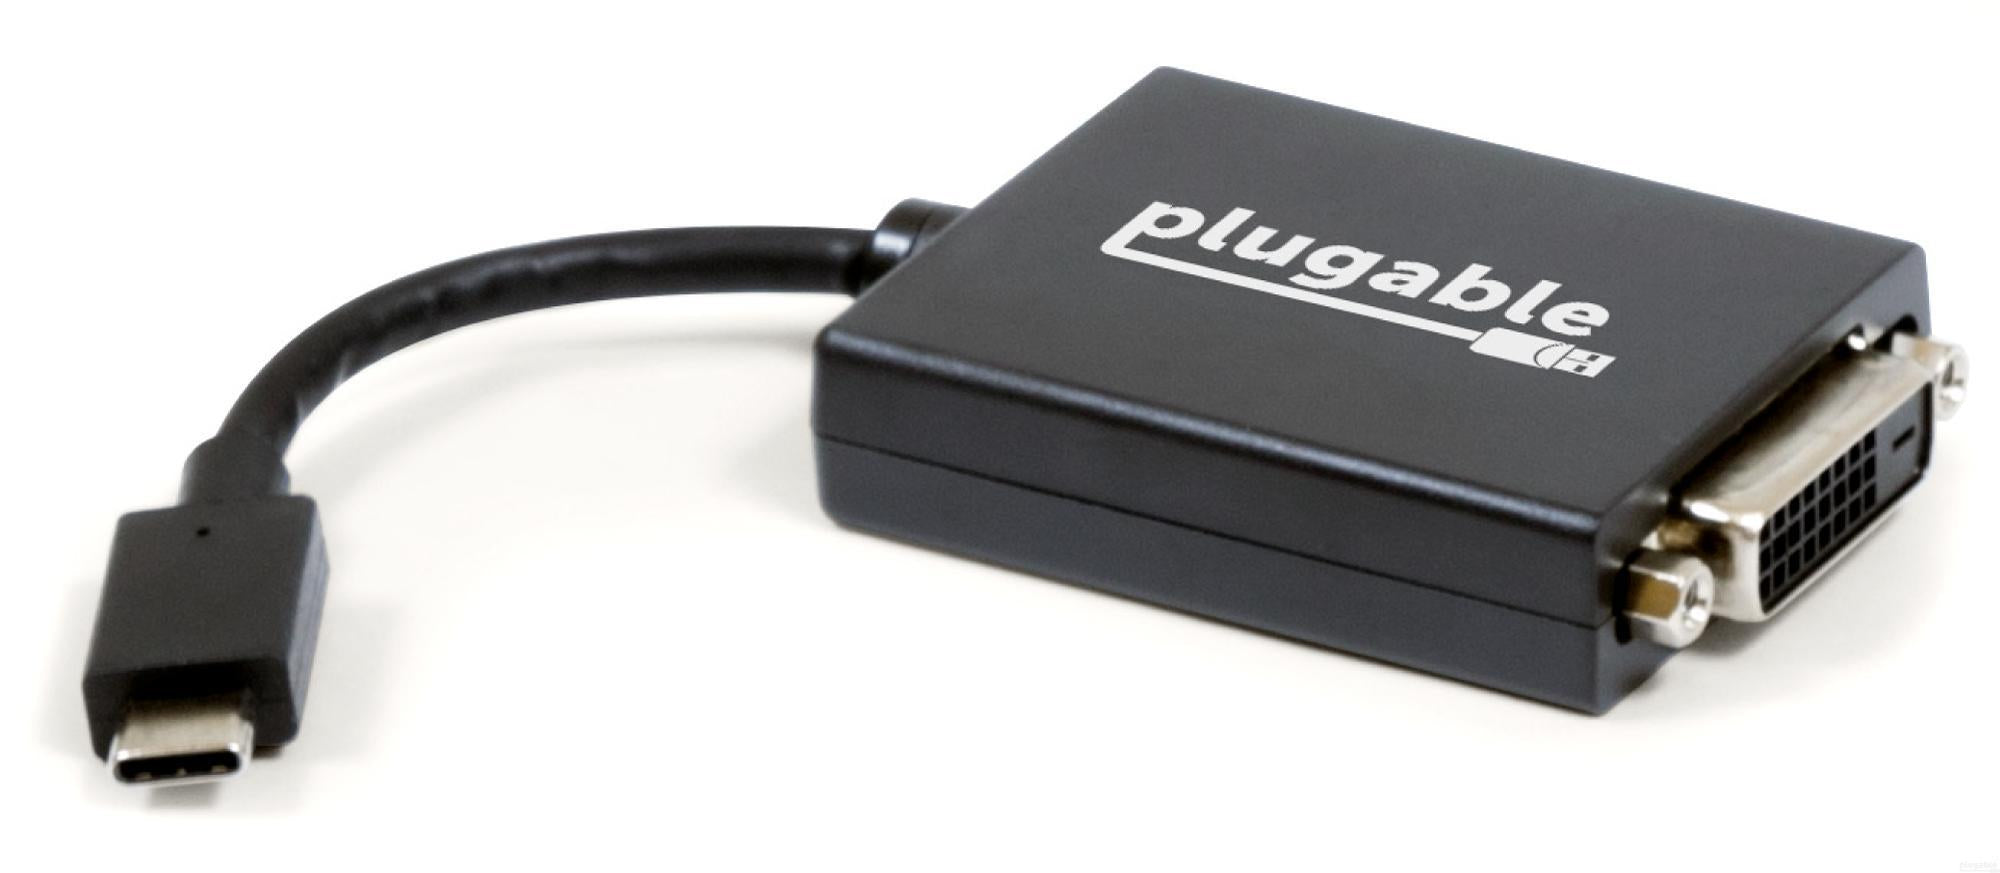 Plugable 3.1 Type-C to DVI Adapter – Plugable Technologies